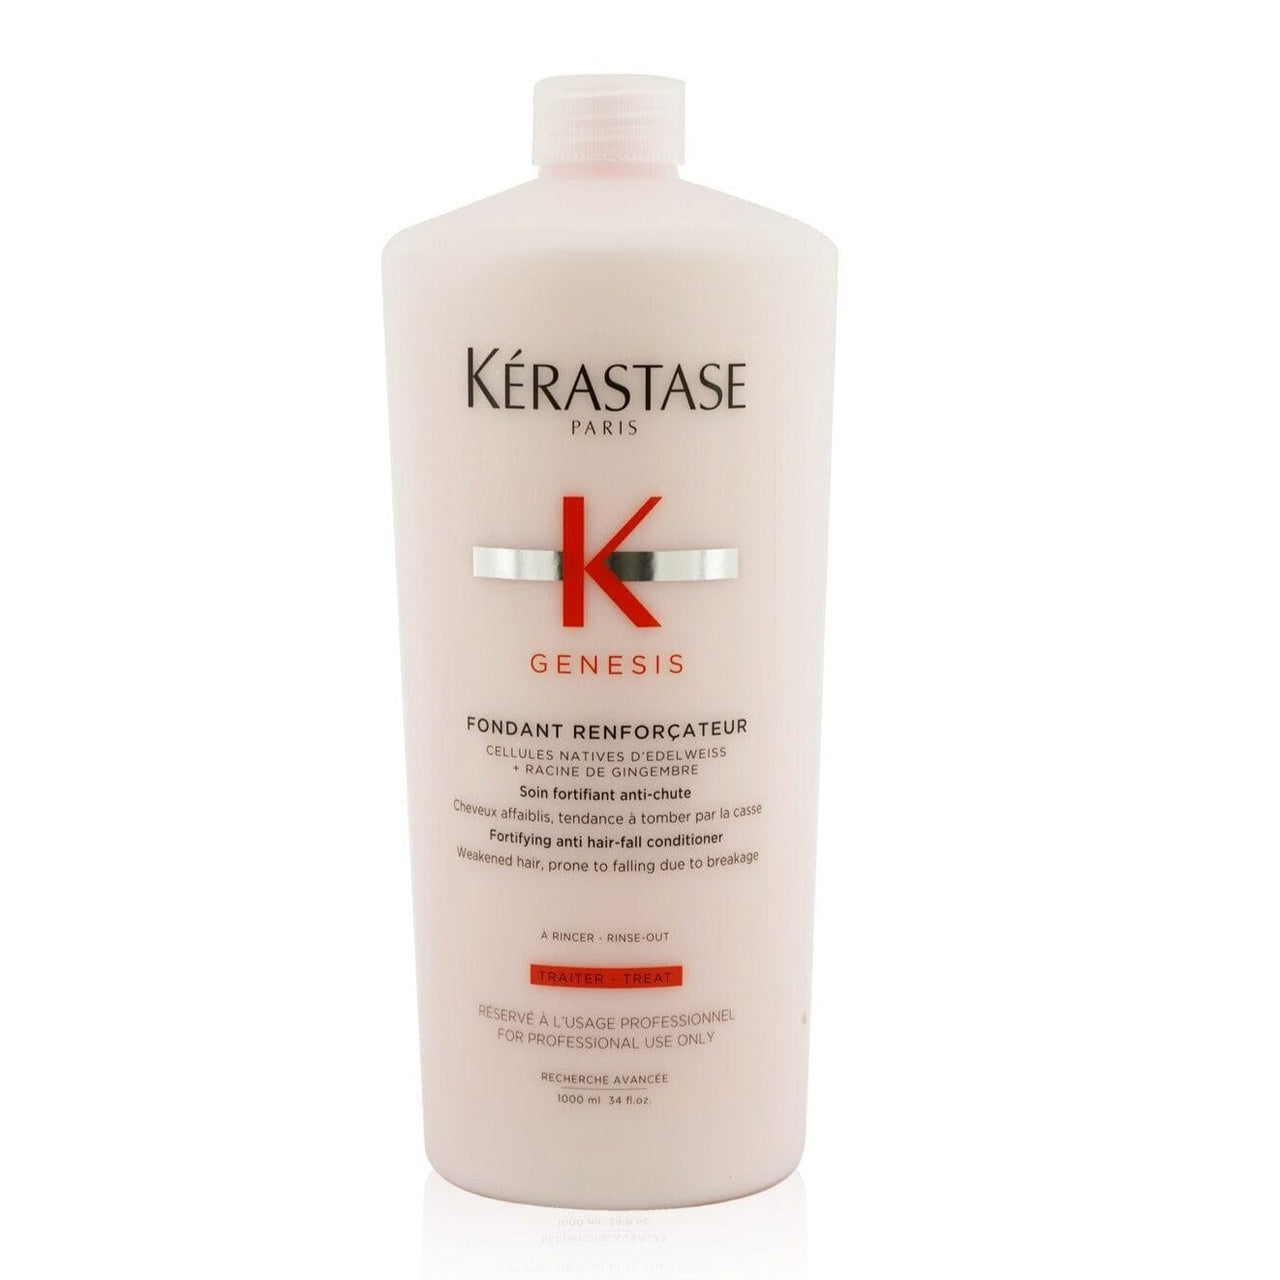 KERASTASE - GENESIS_Fondant Renforcateur Fortifying Anti Hair-fall Conditioner_Cosmetic World